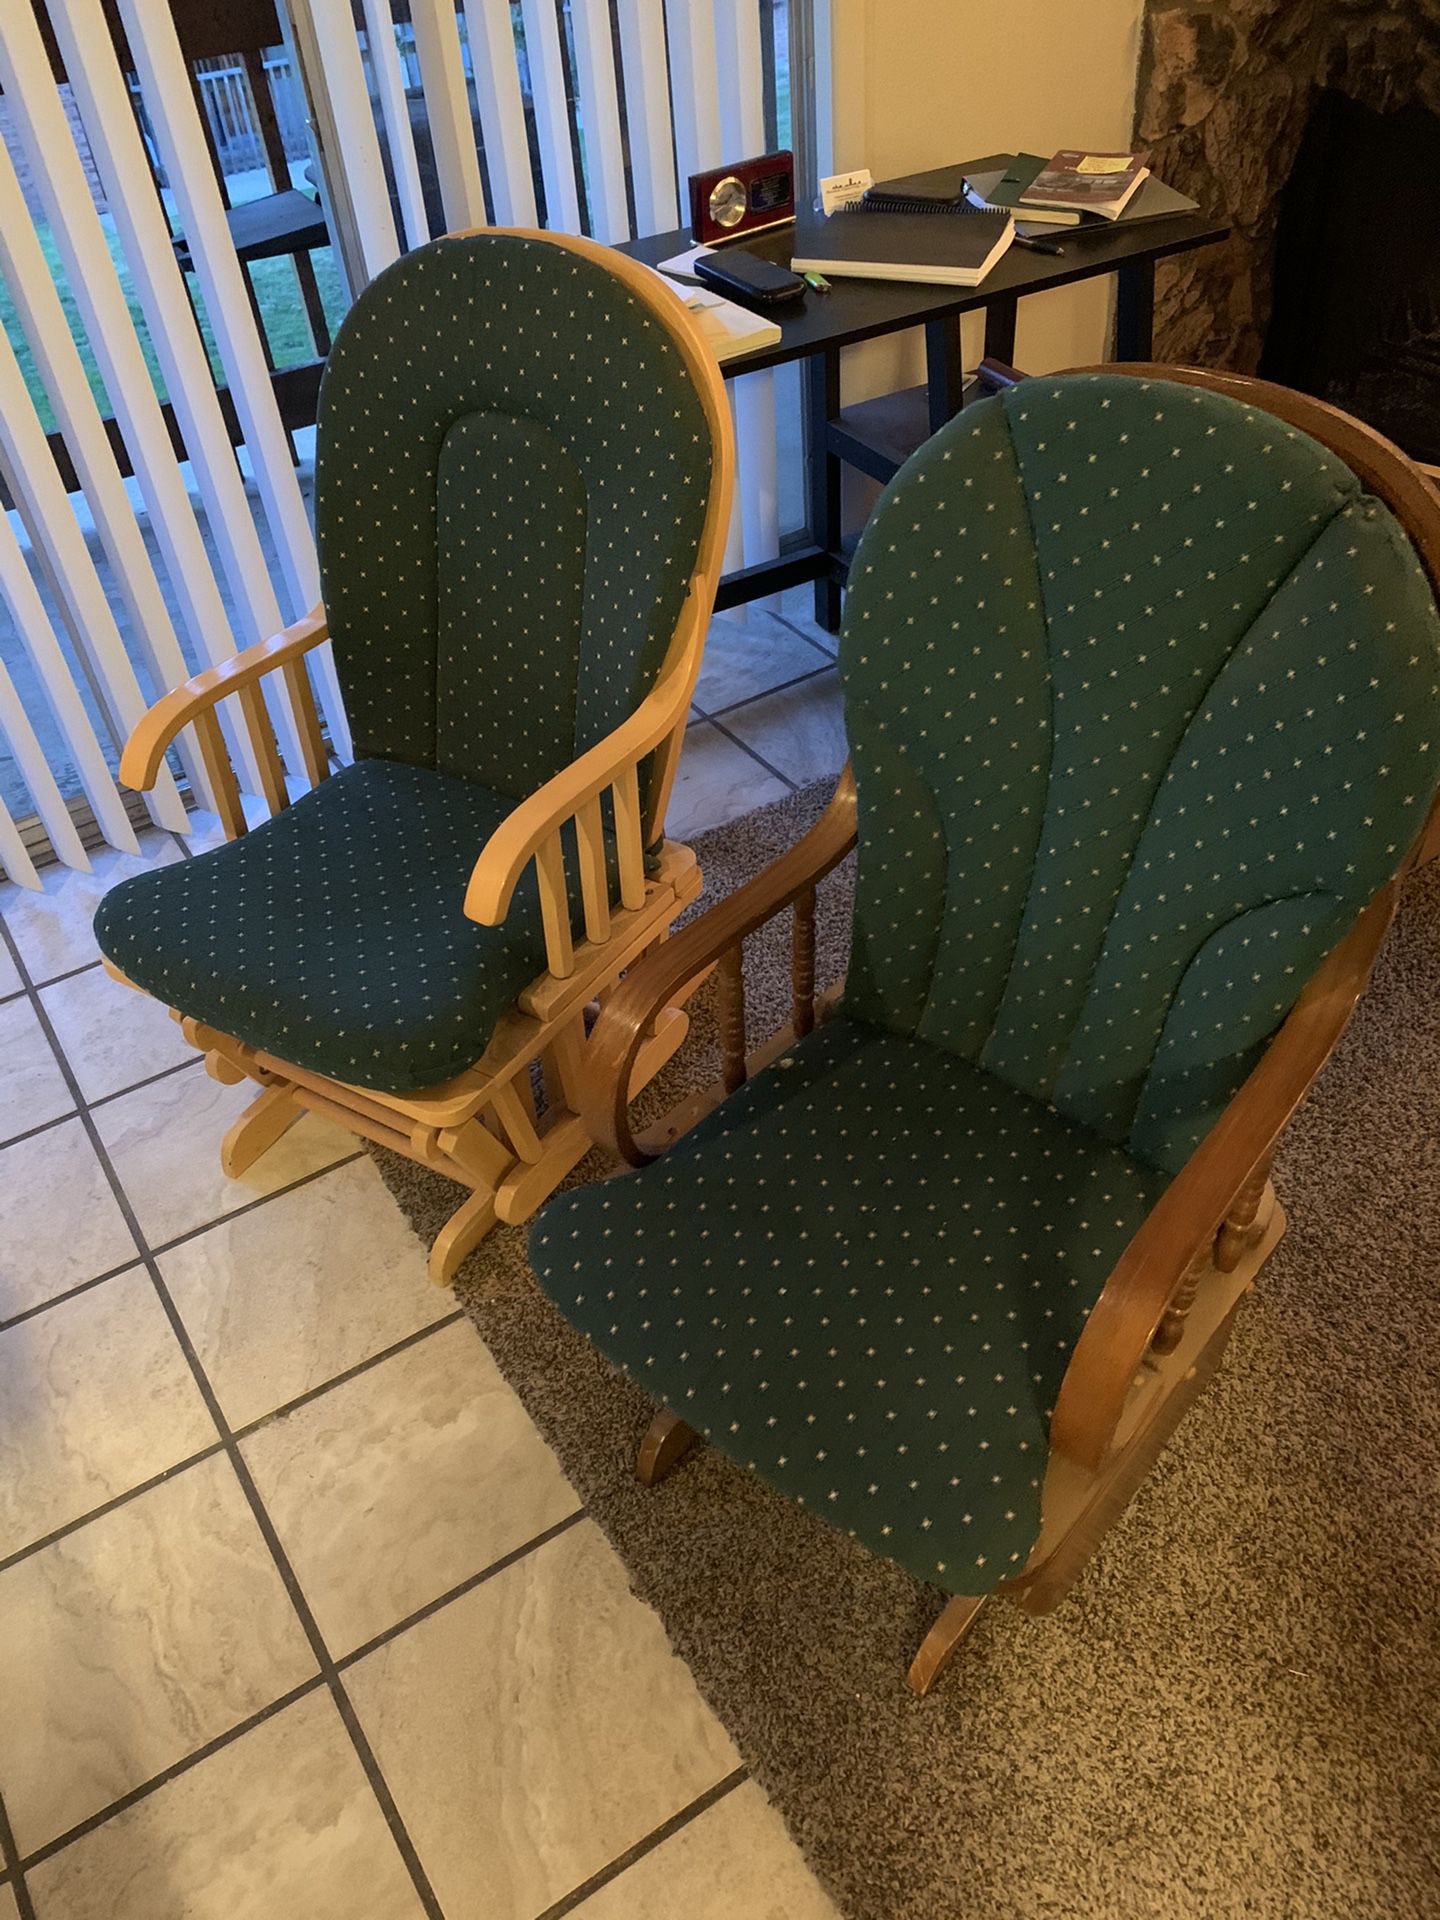 Rocker chairs